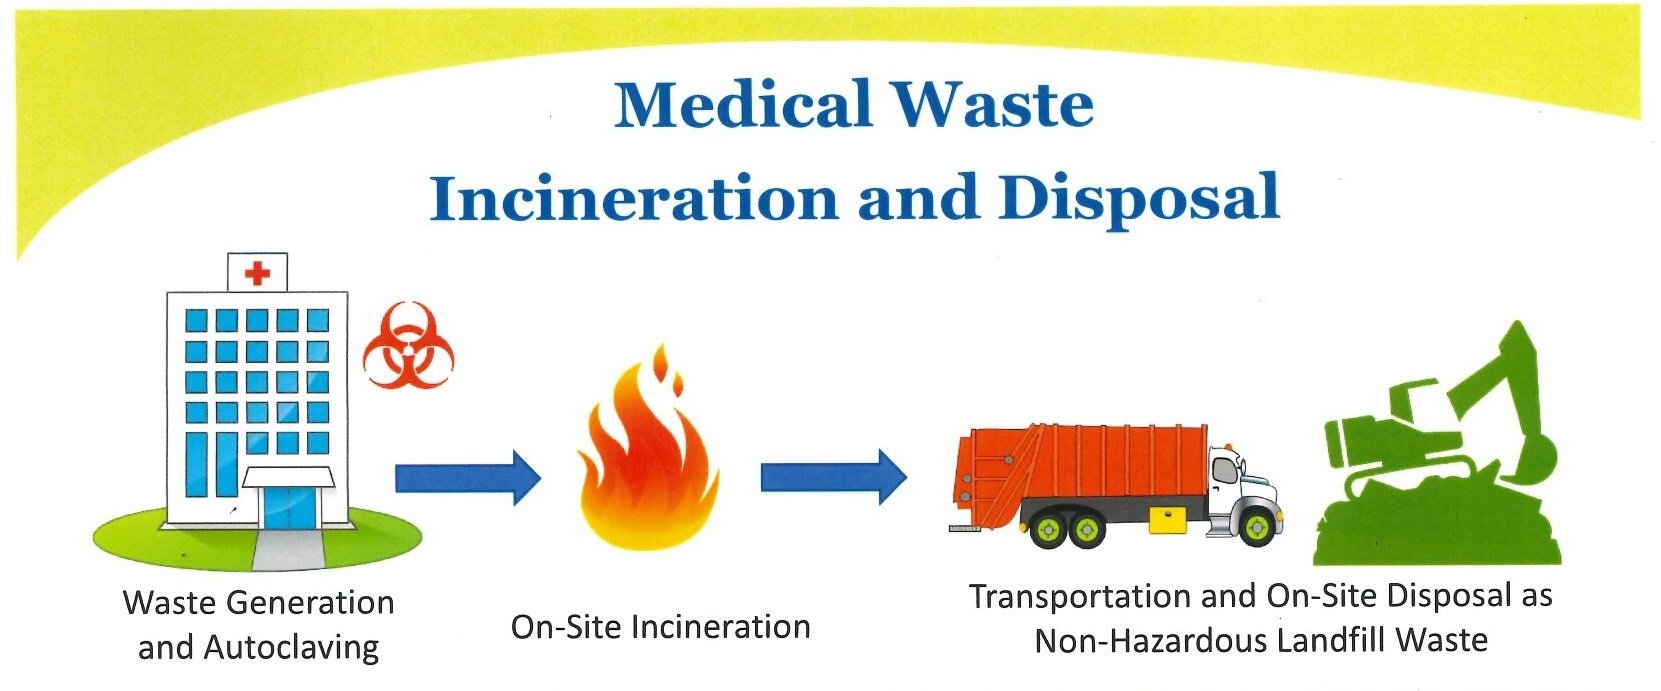 medical waste incinerator,clinical waste incinerator,eco friendly incinerator,medical incinerator,medical waste disposal and incineration